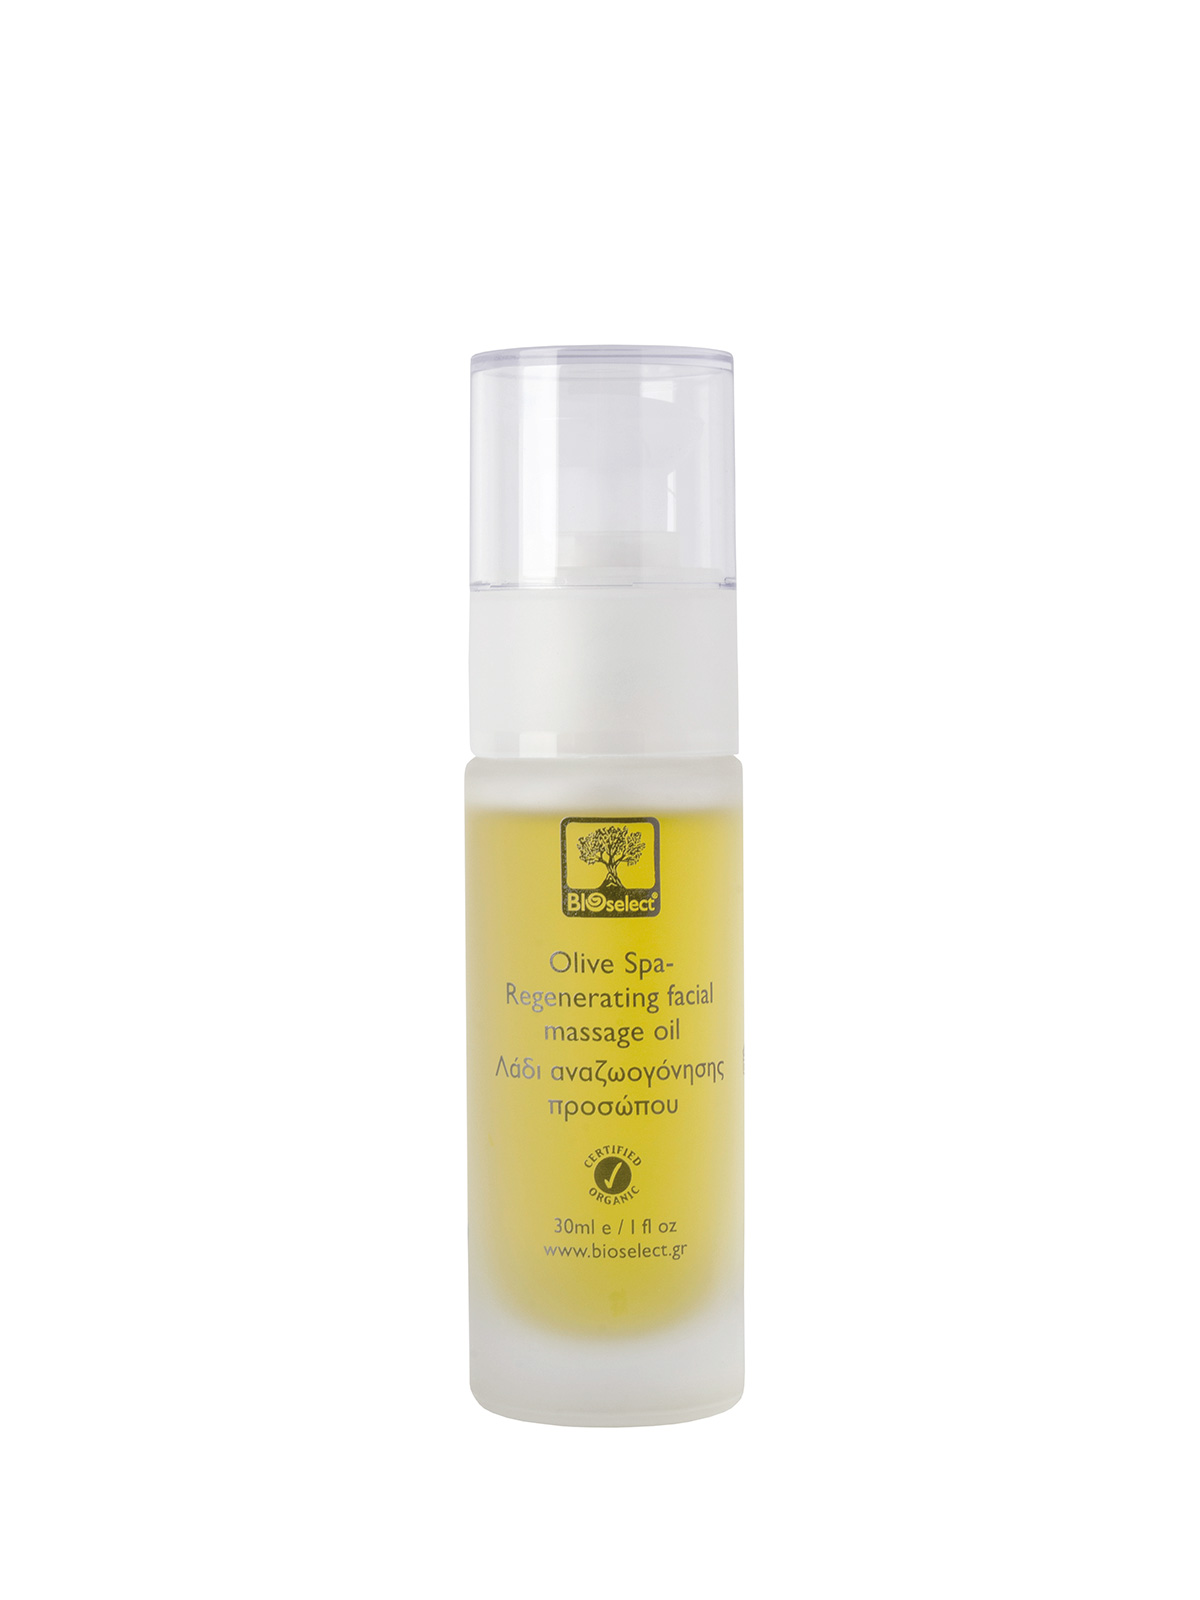 Olive Spa Regenerating Facial Massage Oil – Bioselect